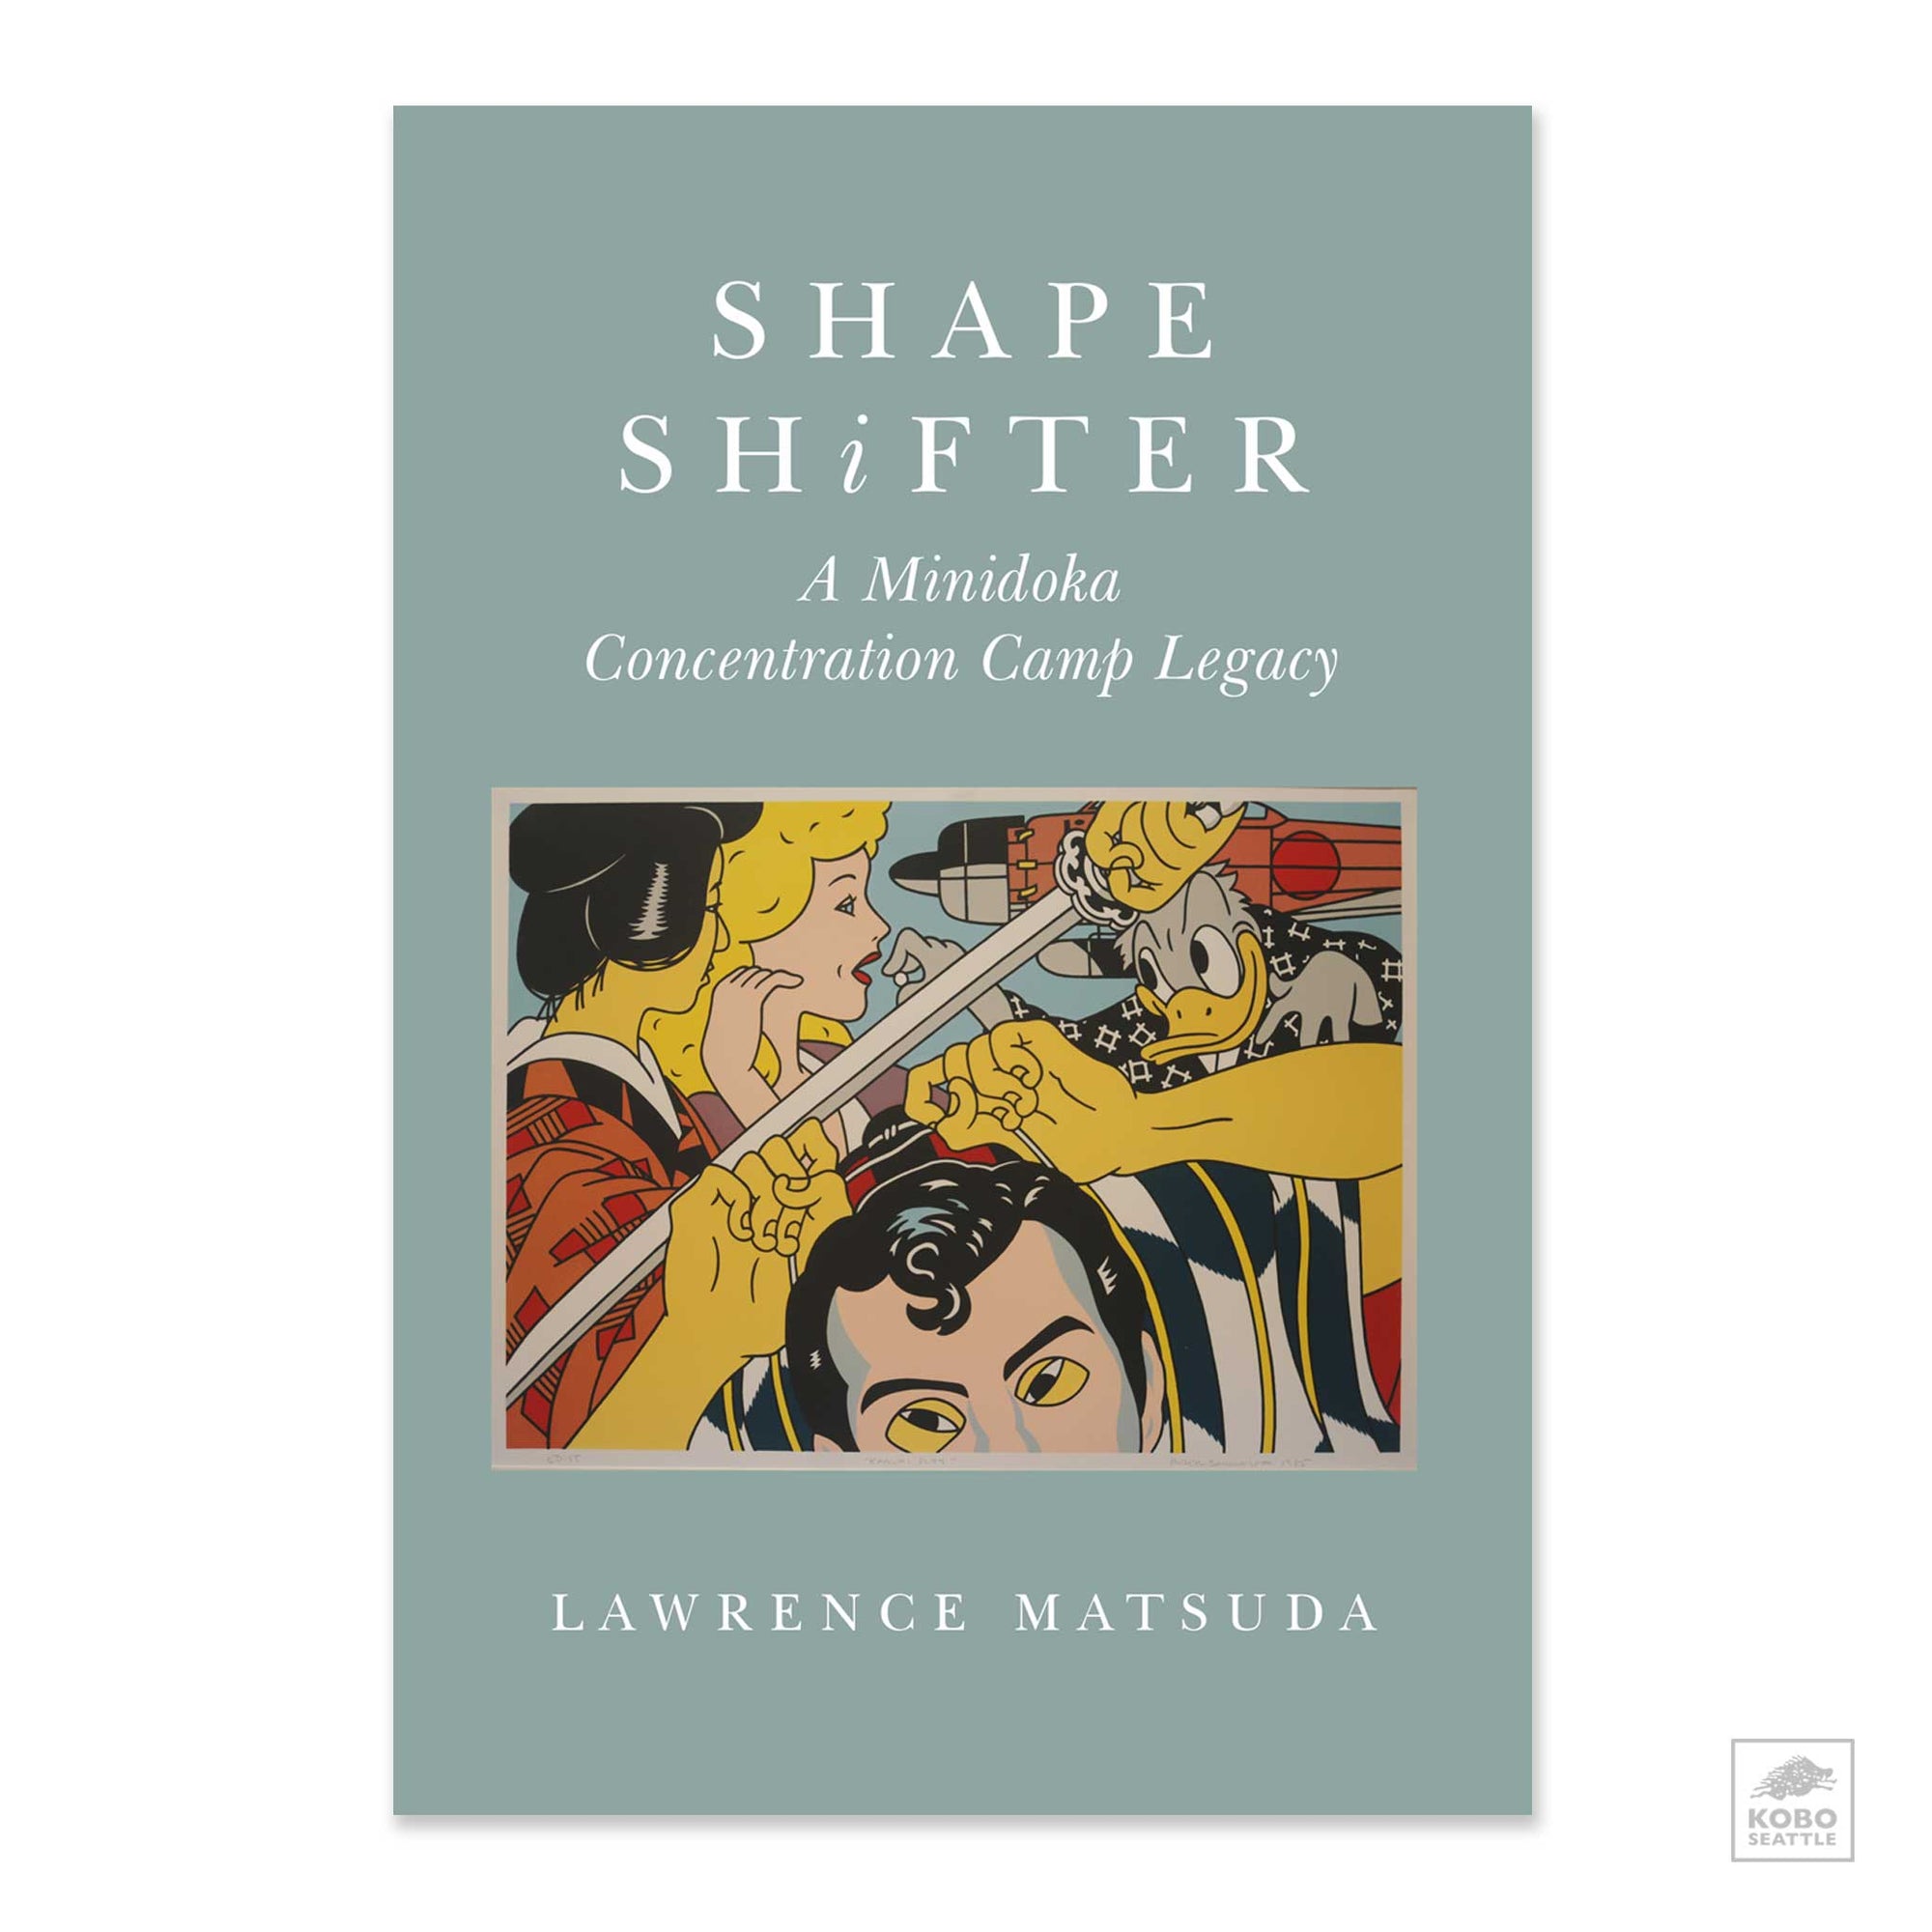 Shape Shifter: A Minidoka Concentration Camp Legacy by Lawrence Matsuda